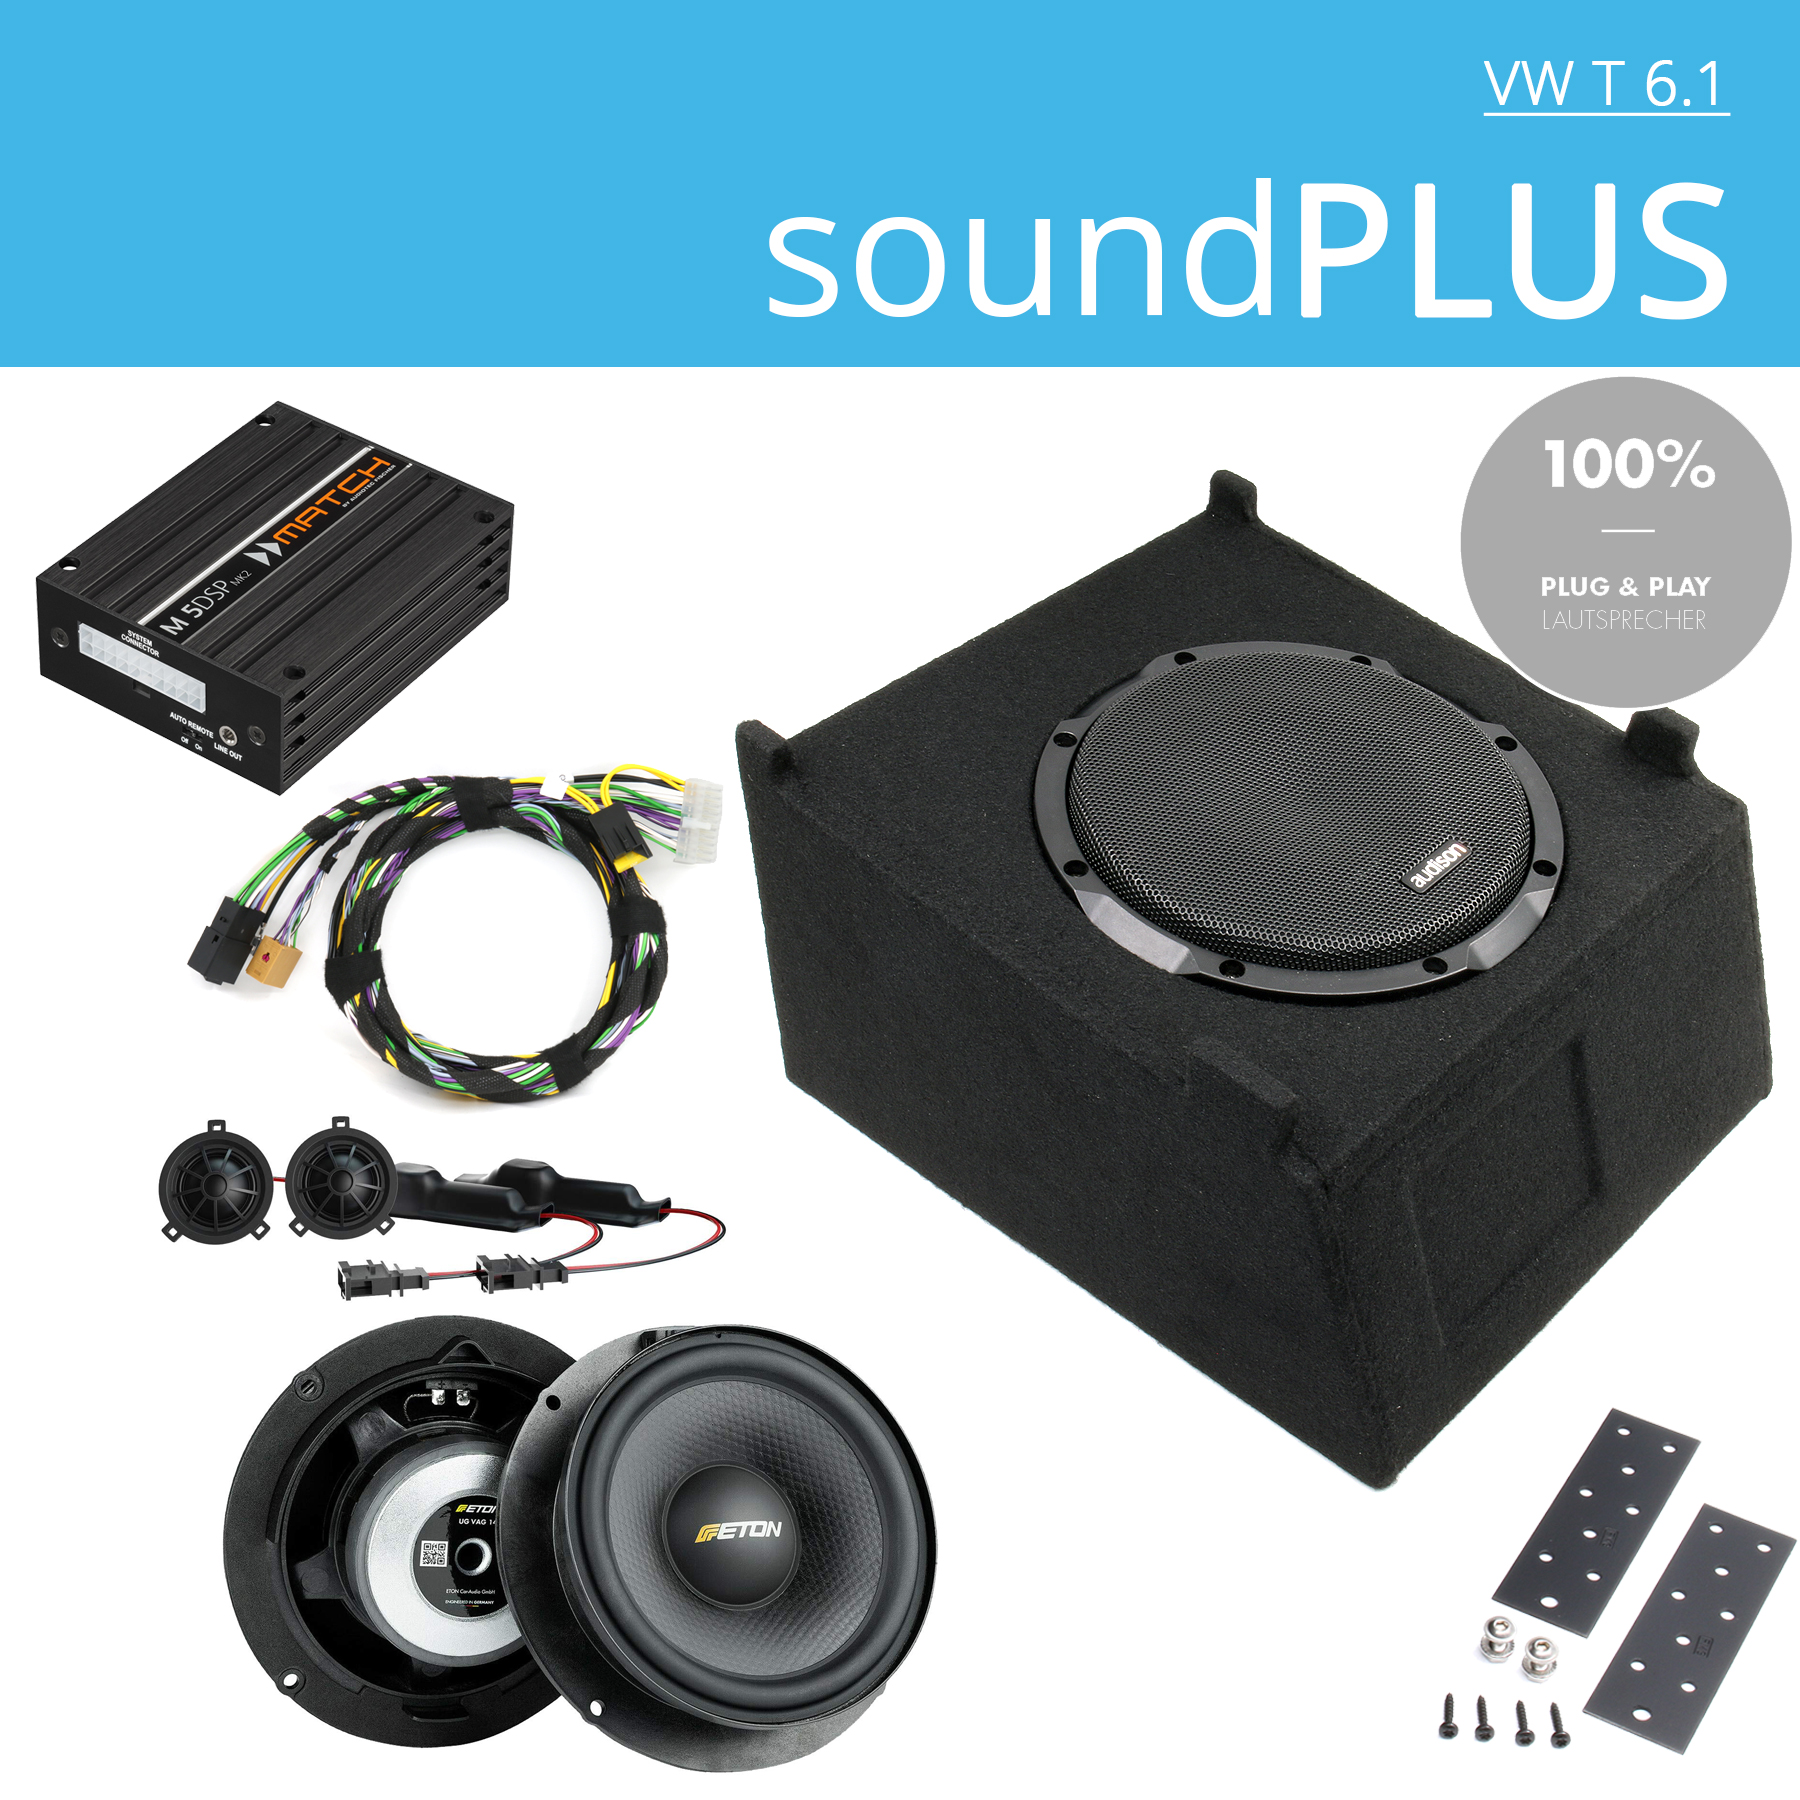 VW T 6.1 soundPLUS